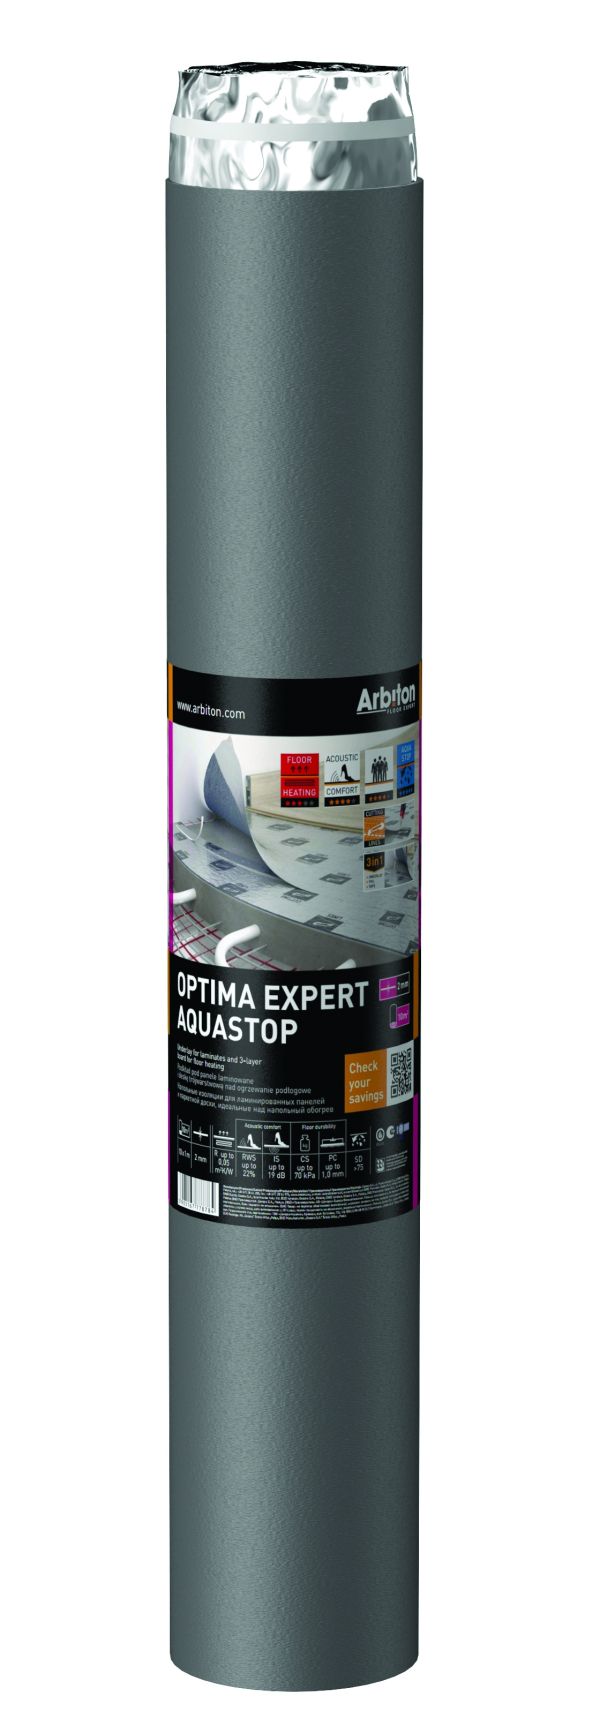 Подложка Arbiton Optima Expert Aquastop 2 мм XPS пароизоляция скотч - фото 2